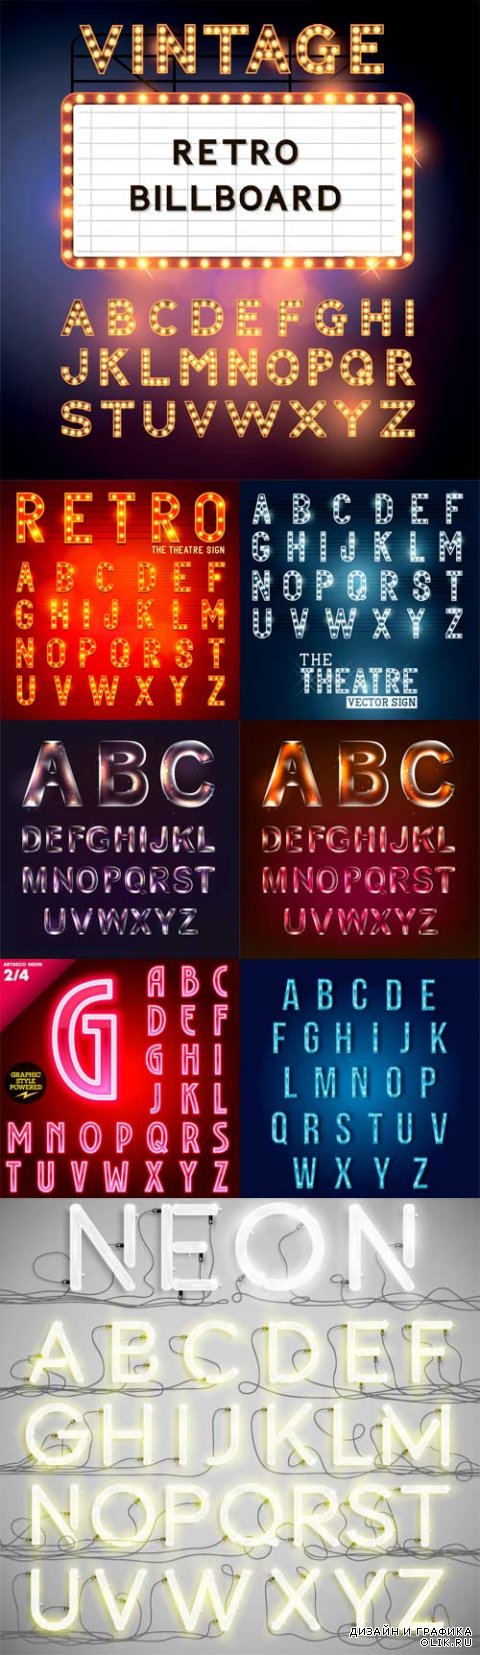 Neon light vector alphabet